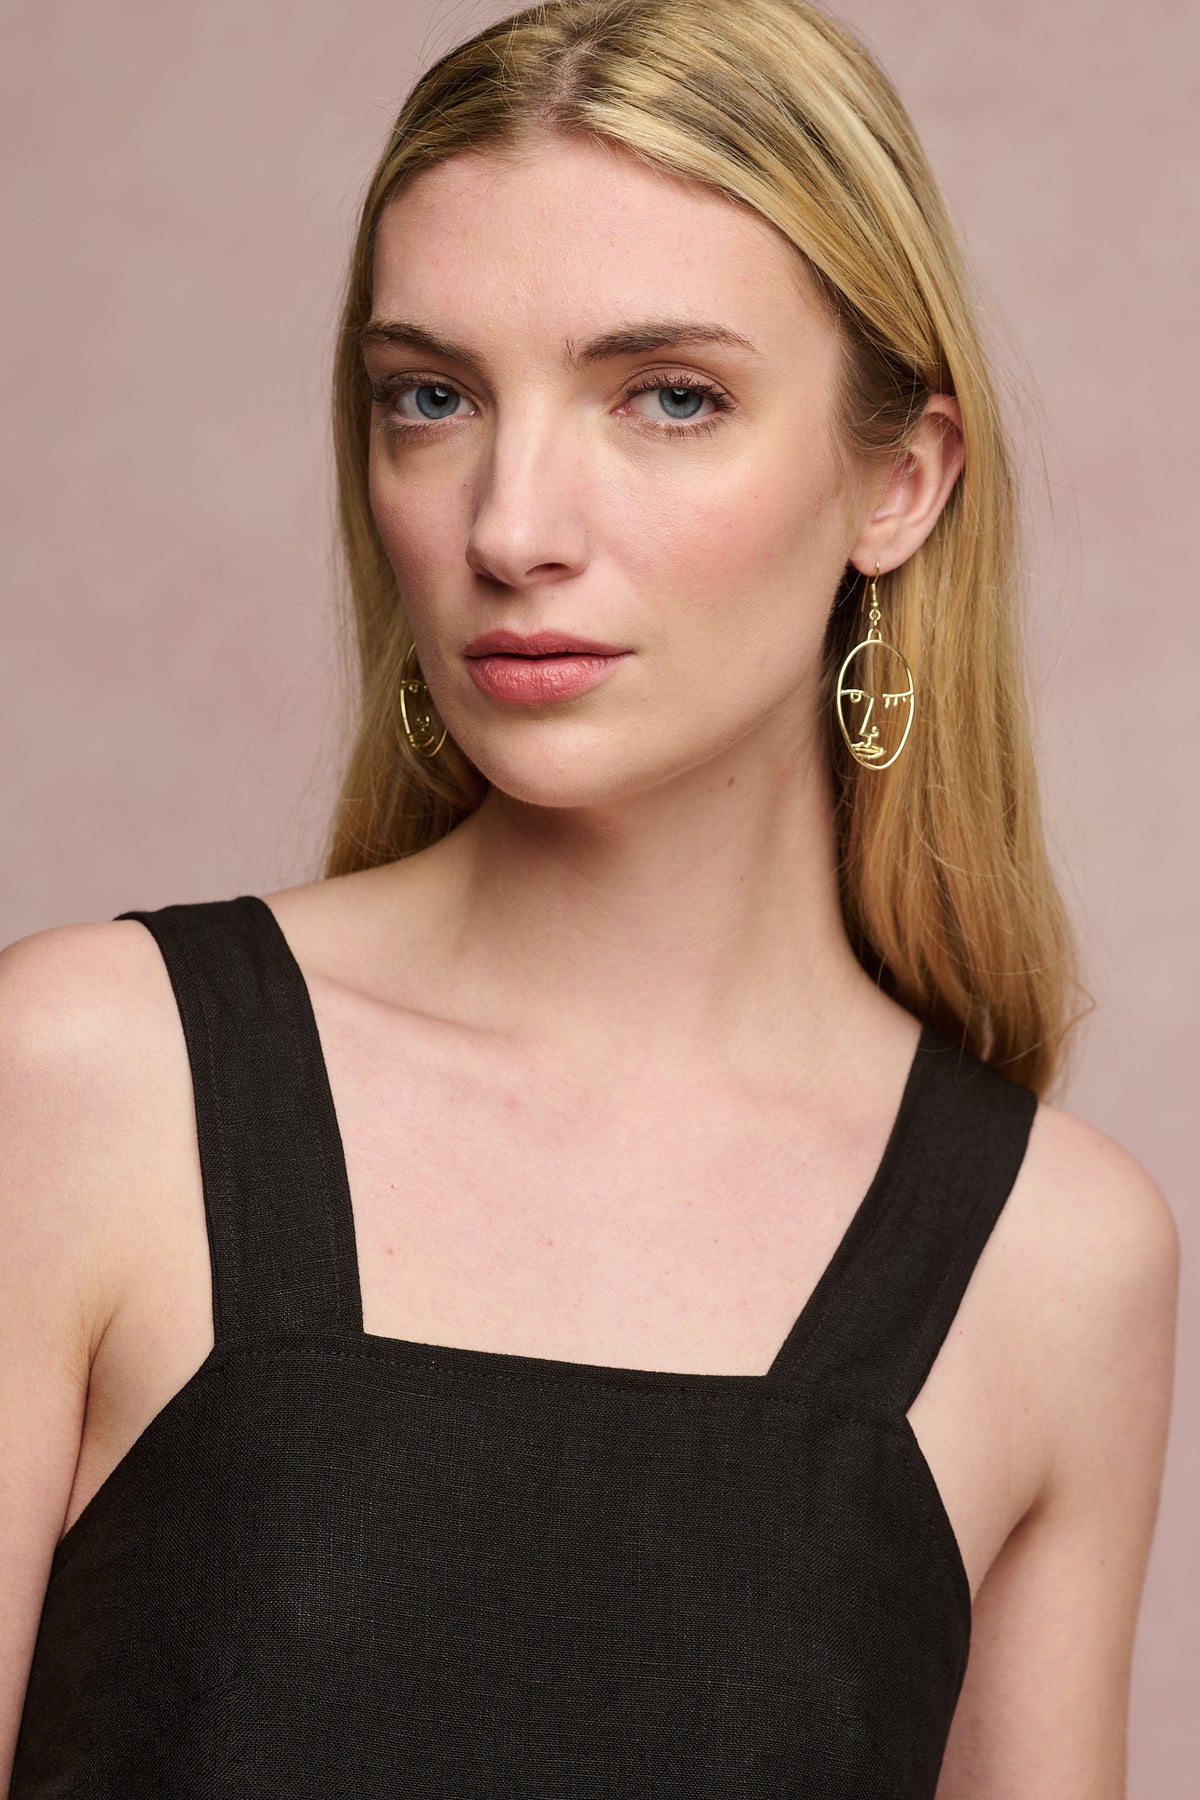 
            Portrait of fair skinned female with blonde hair behind ears wearing linen sun dress in black with gold earrings.